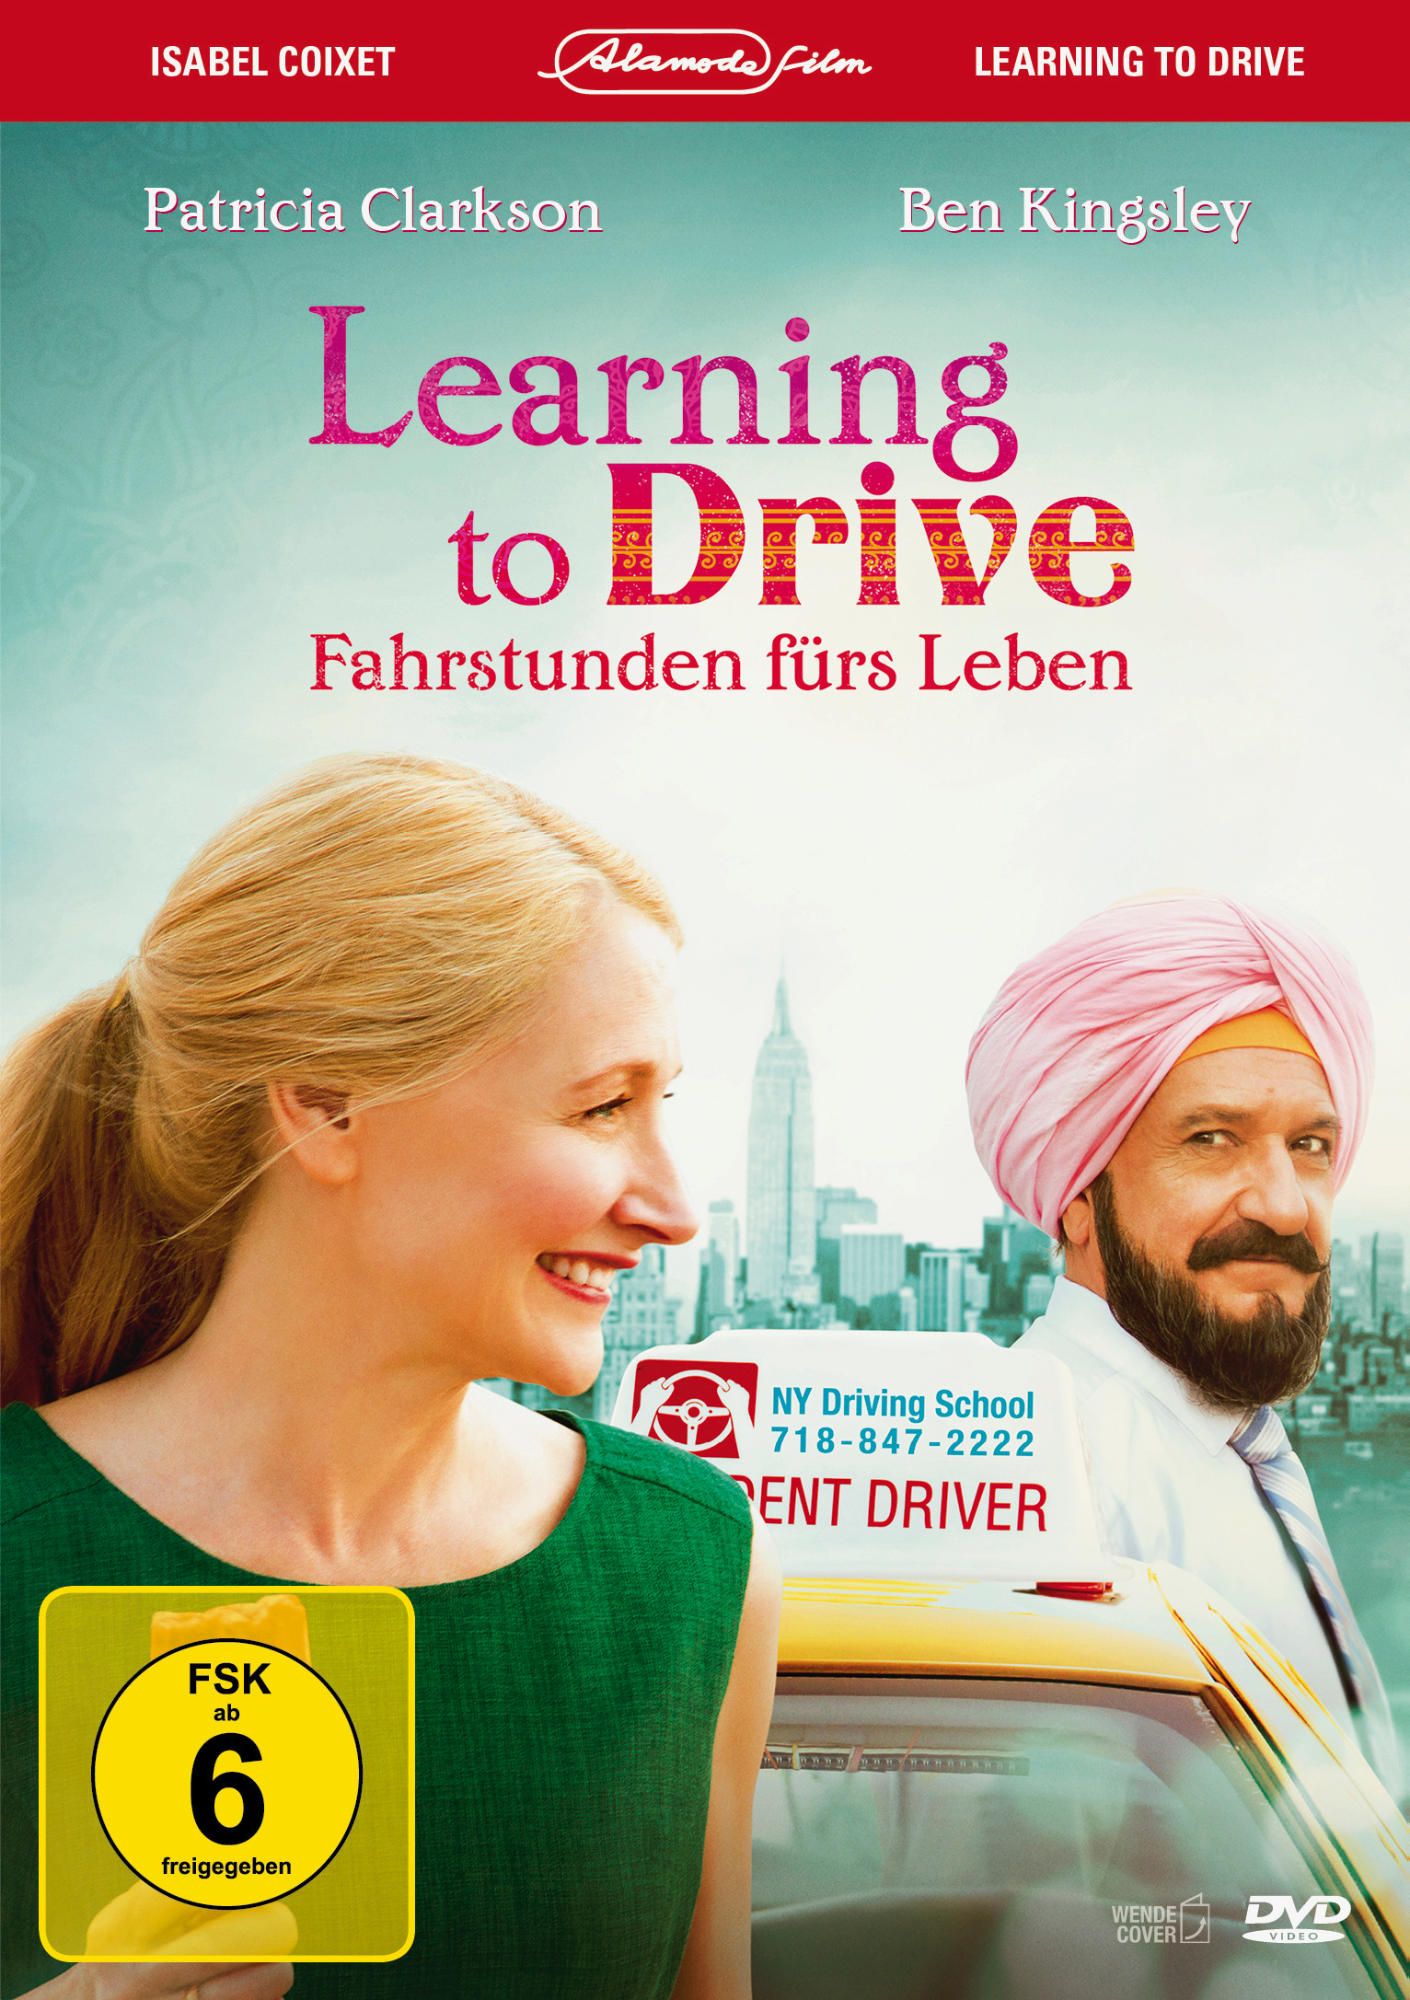 Learning to drive Leben - DVD Fahrstunden fürs